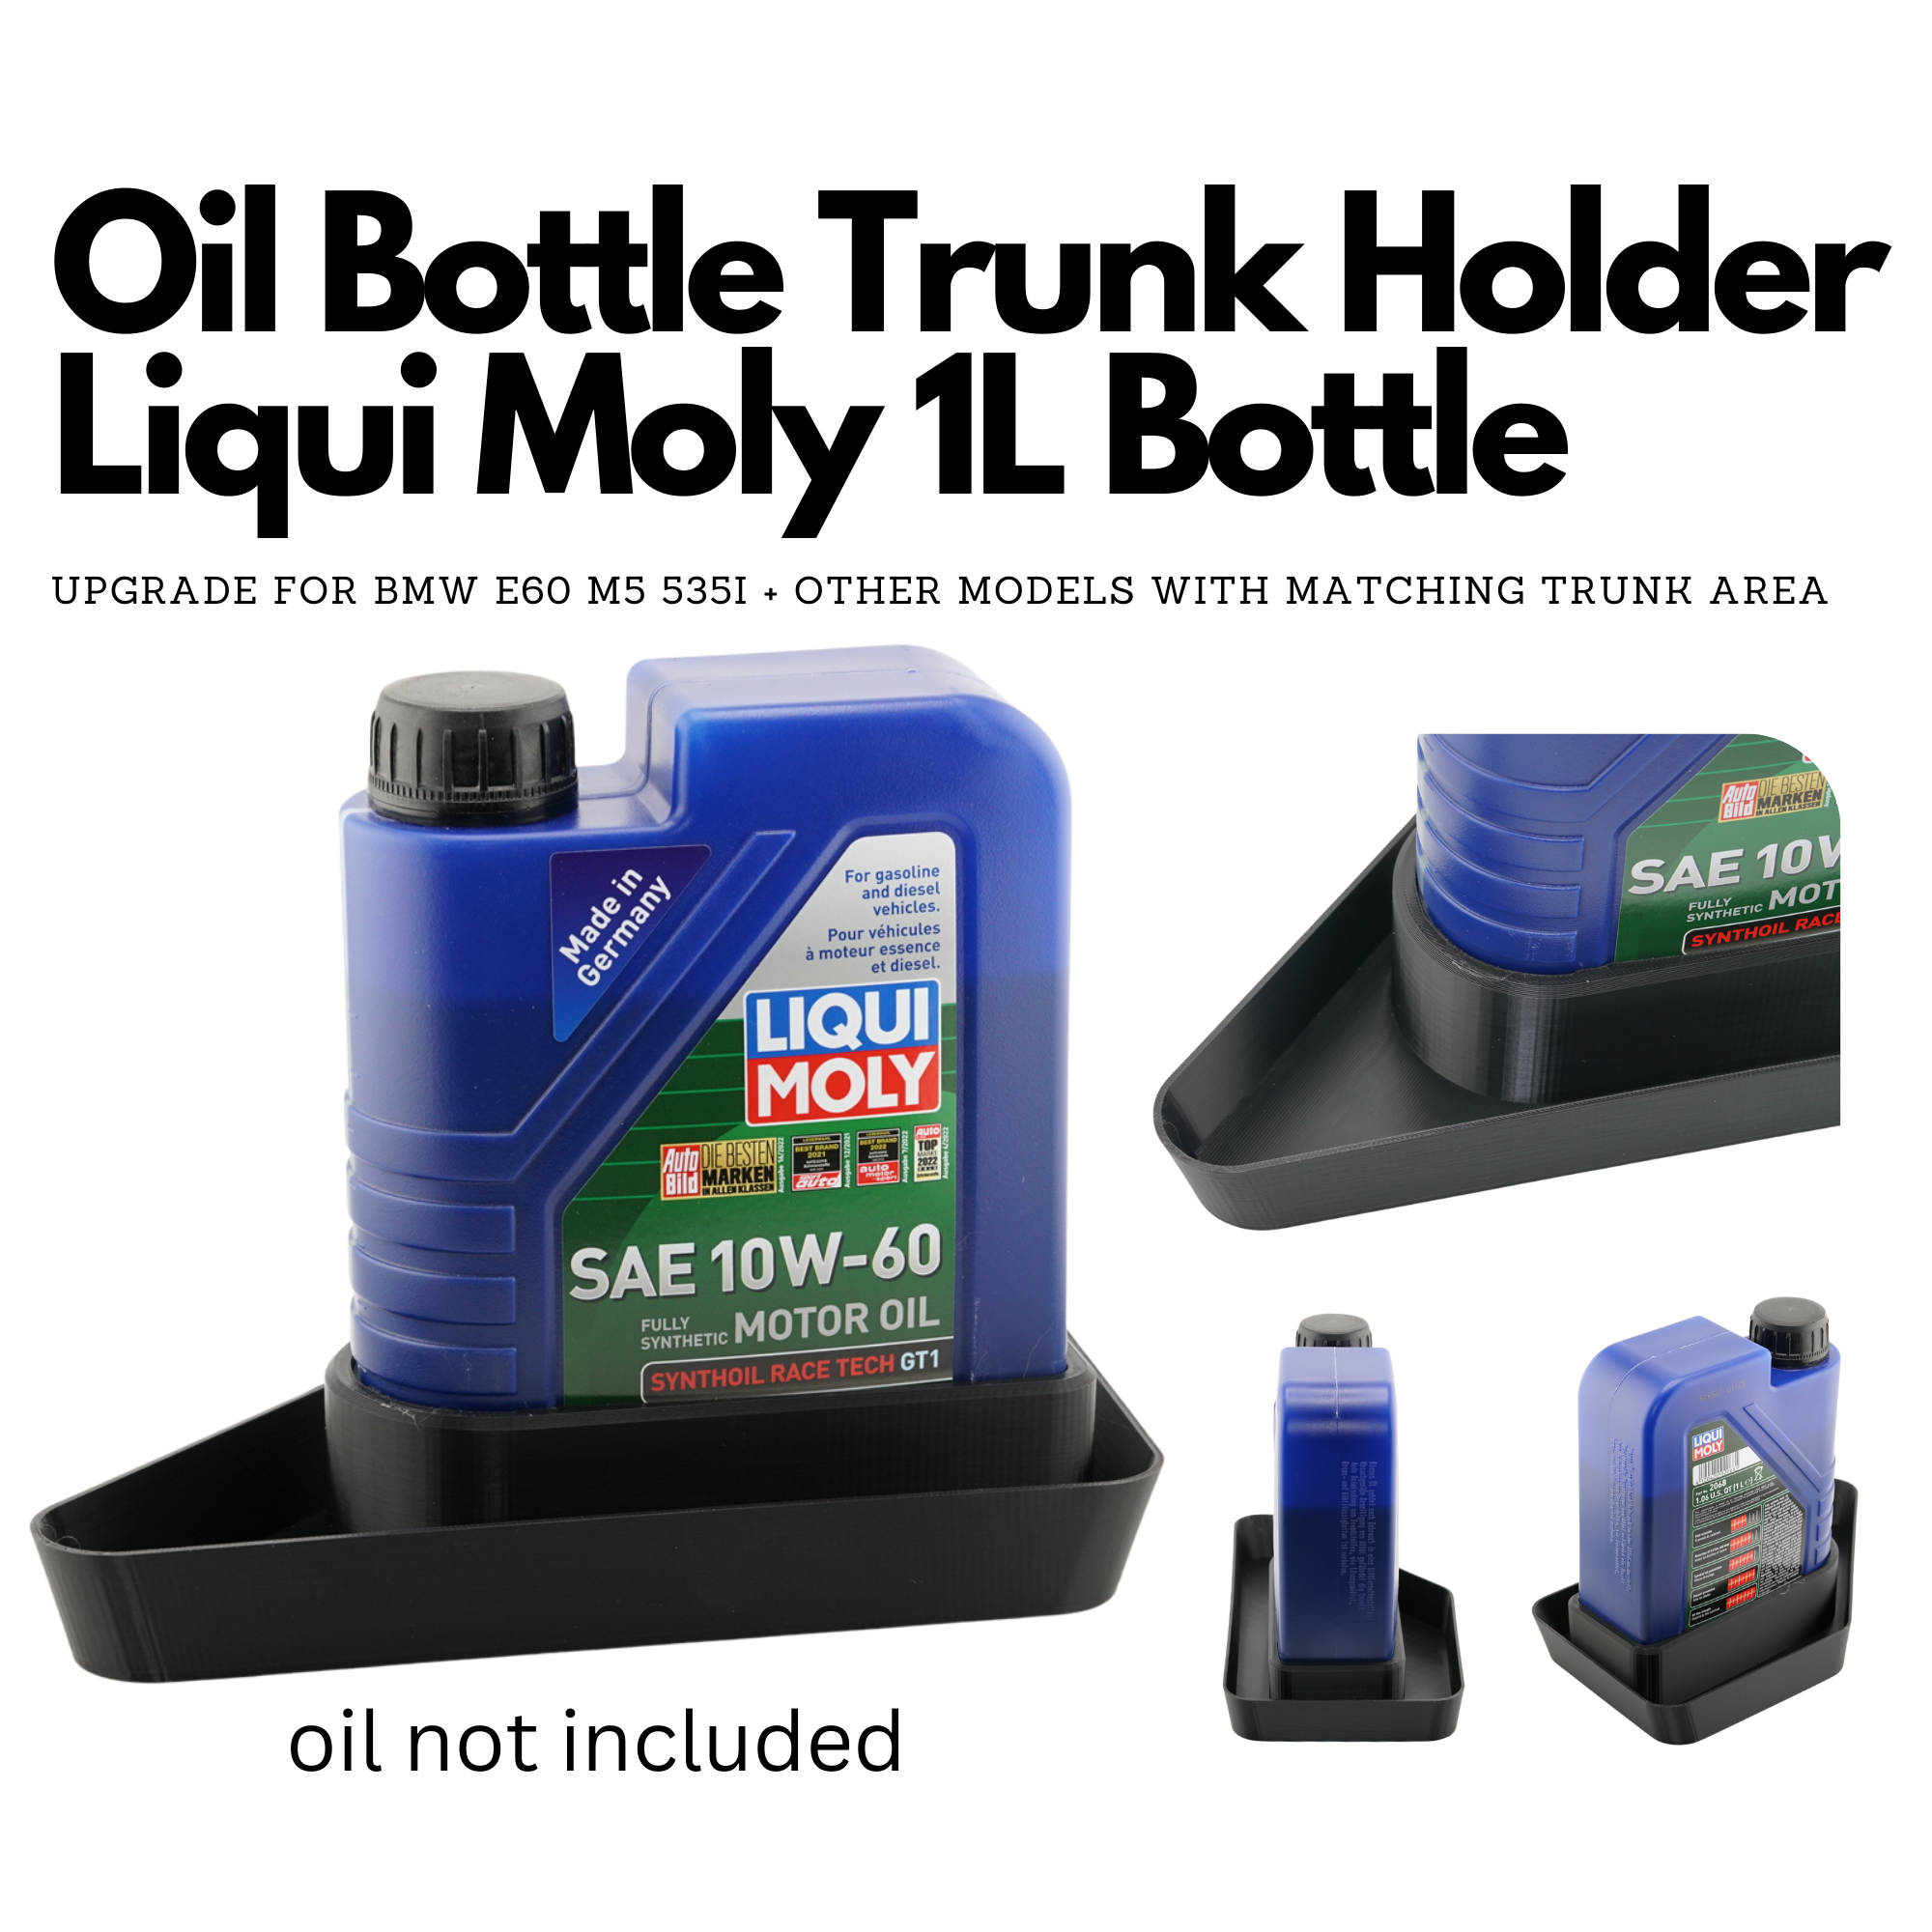 Custom-Fit Oil Bottle Trunk Holder for BMW e60 5 Series M5 535i- Secure Mount for 1-Liter Liqui by Oil Bottle